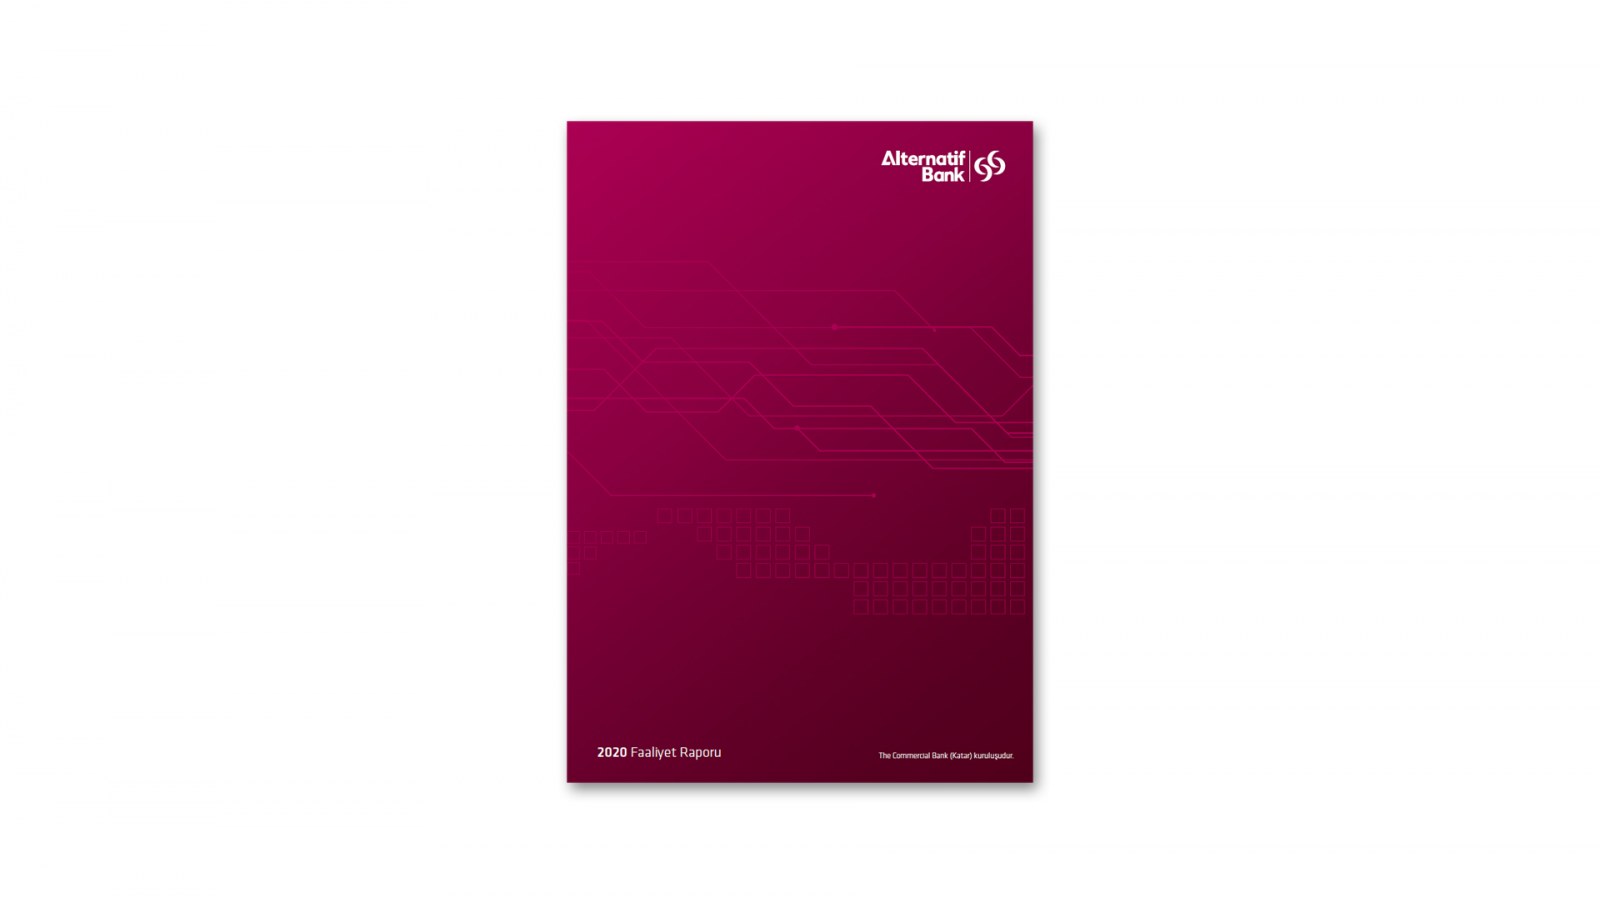 ALTERNATİF BANK / 2020 Faaliyet Raporu / 2020 Annual Report